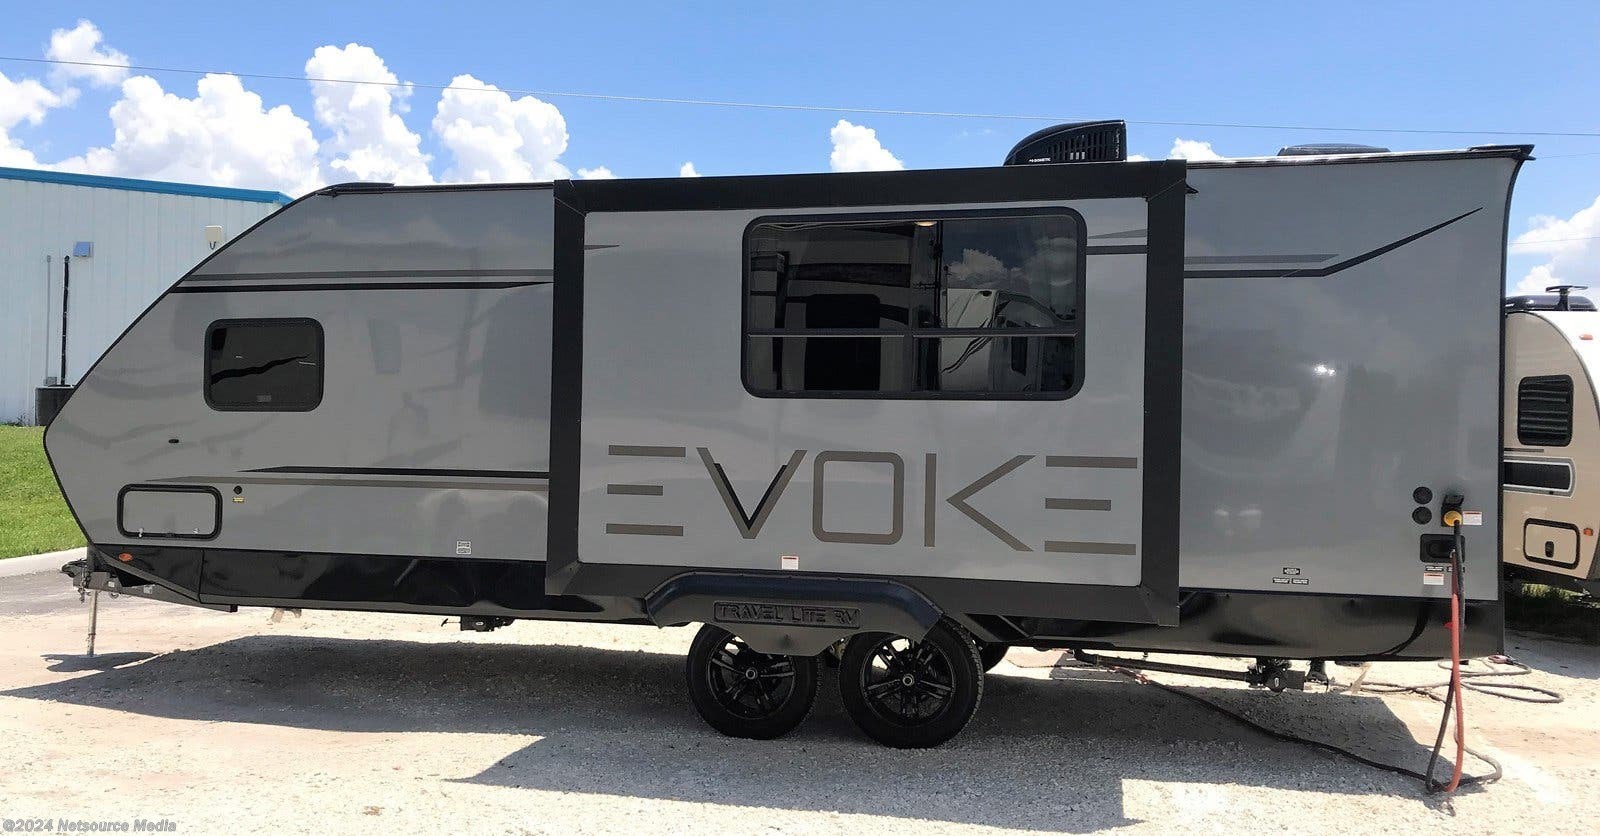 2020 Travel Lite EVOKE RV for Sale in Jacksonville, FL